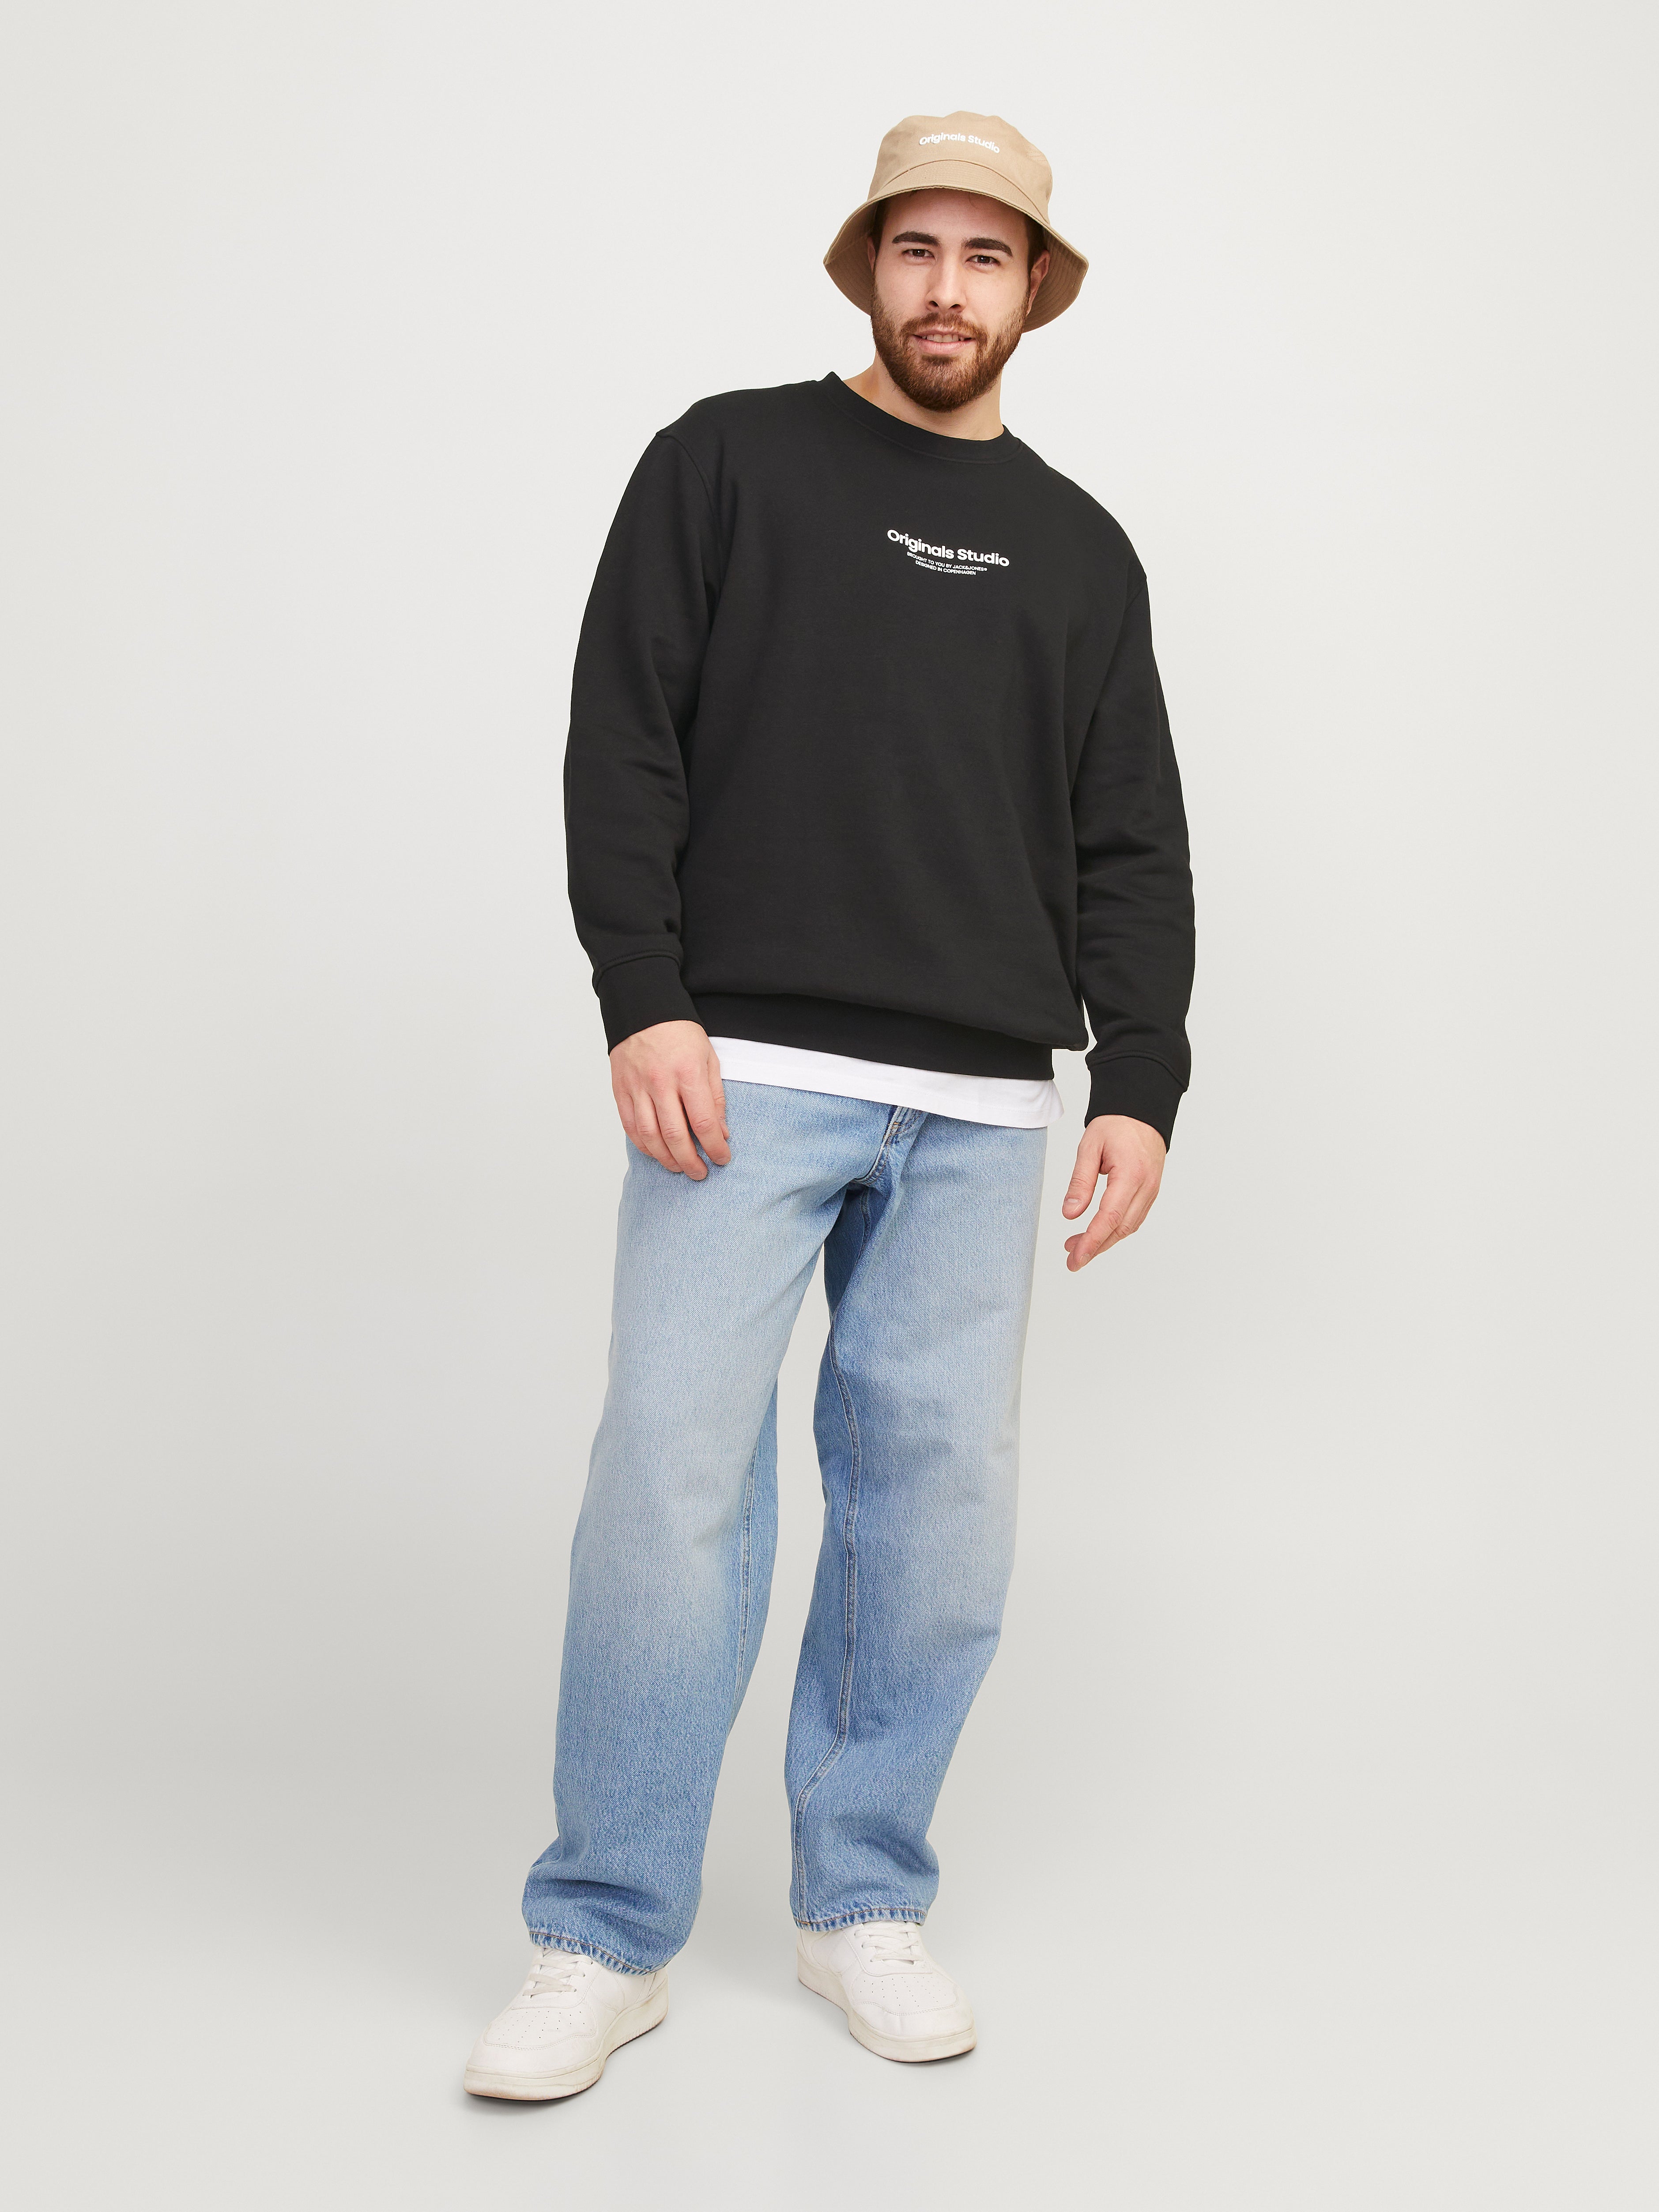 Plus Size Printed Crewn Neck Sweatshirt